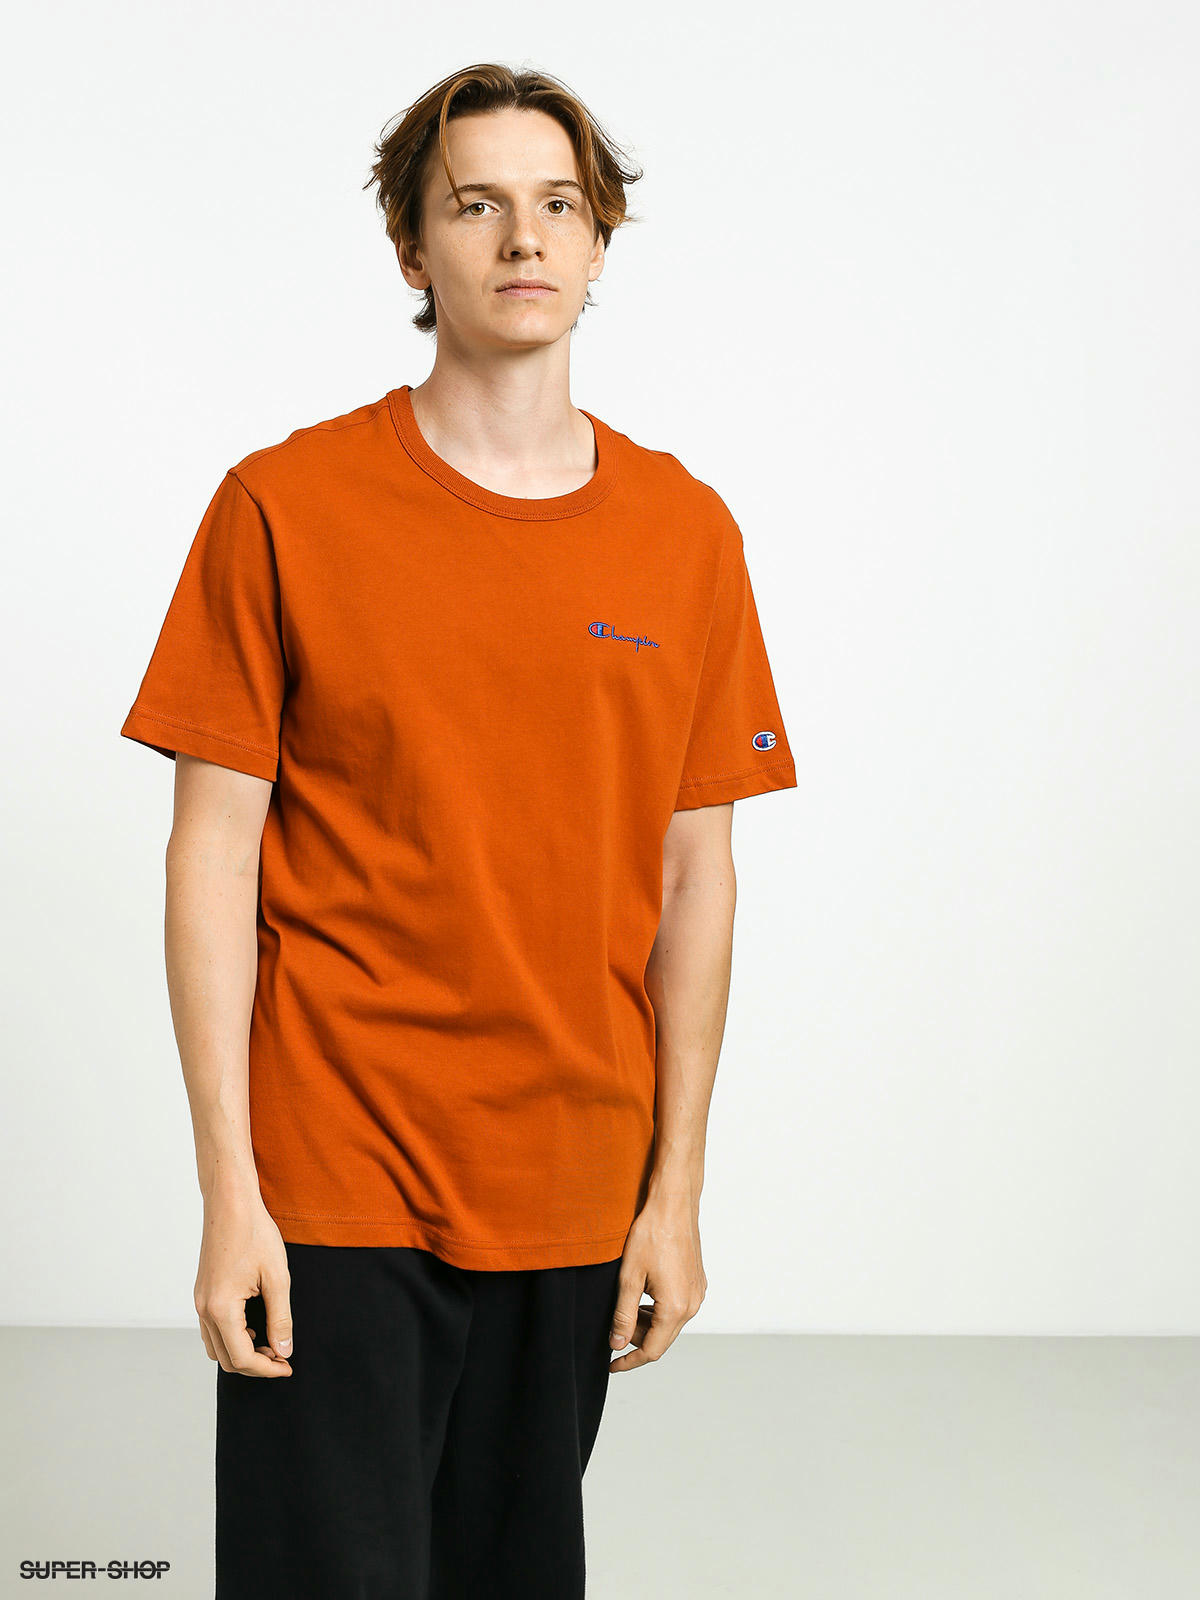 champion orange tshirt